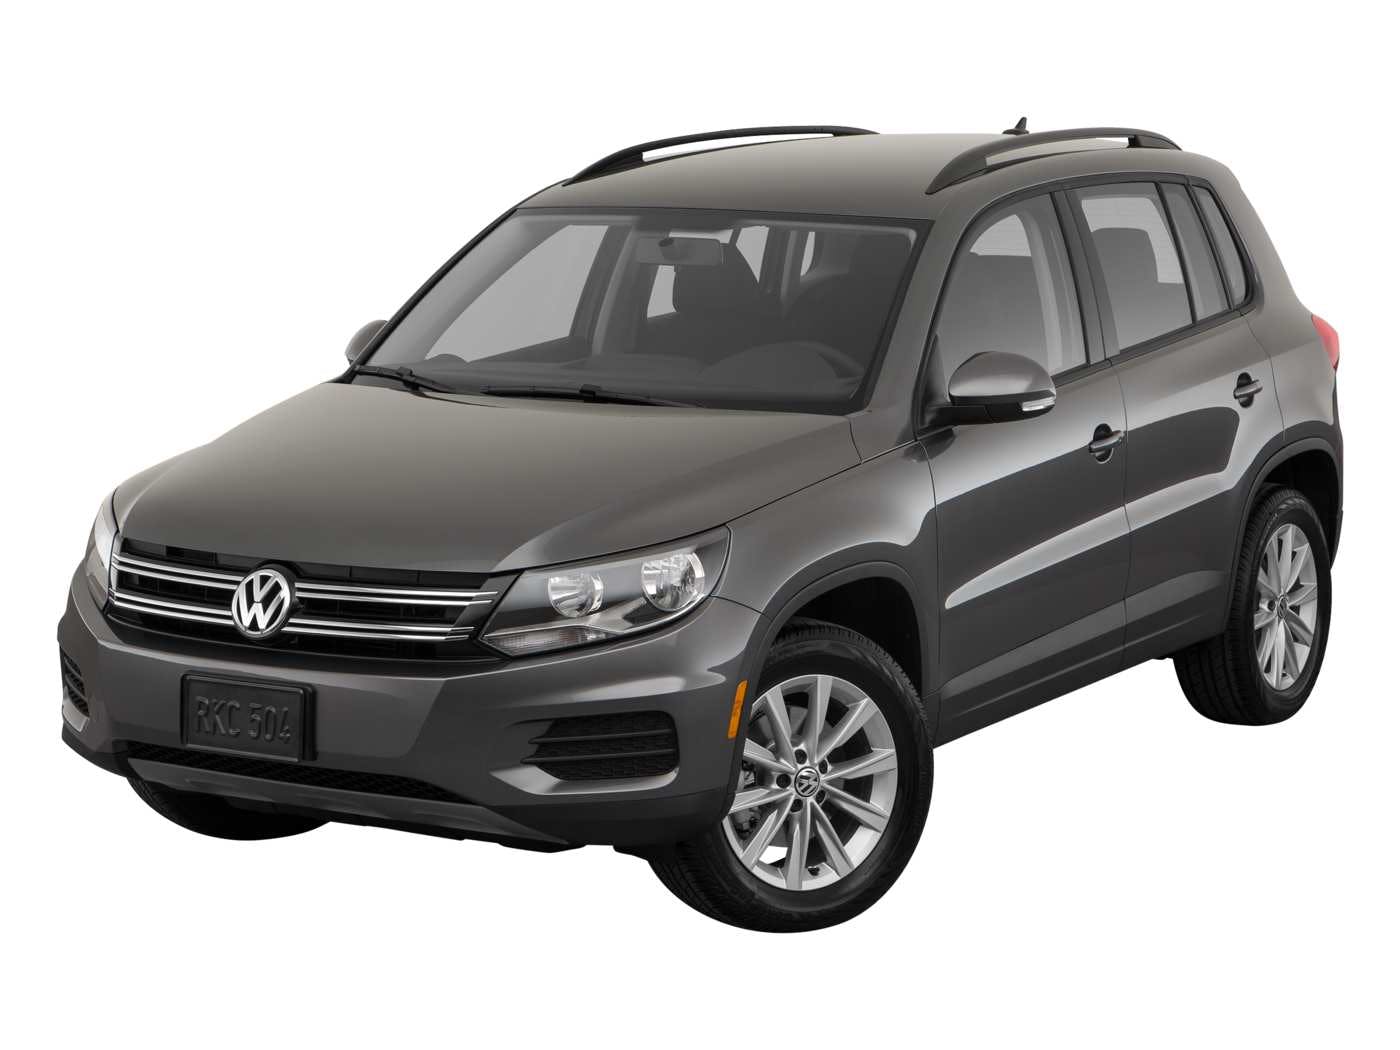 2018 Volkswagen Tiguan Limited Review | Pricing, Trims & Photos - TrueCar